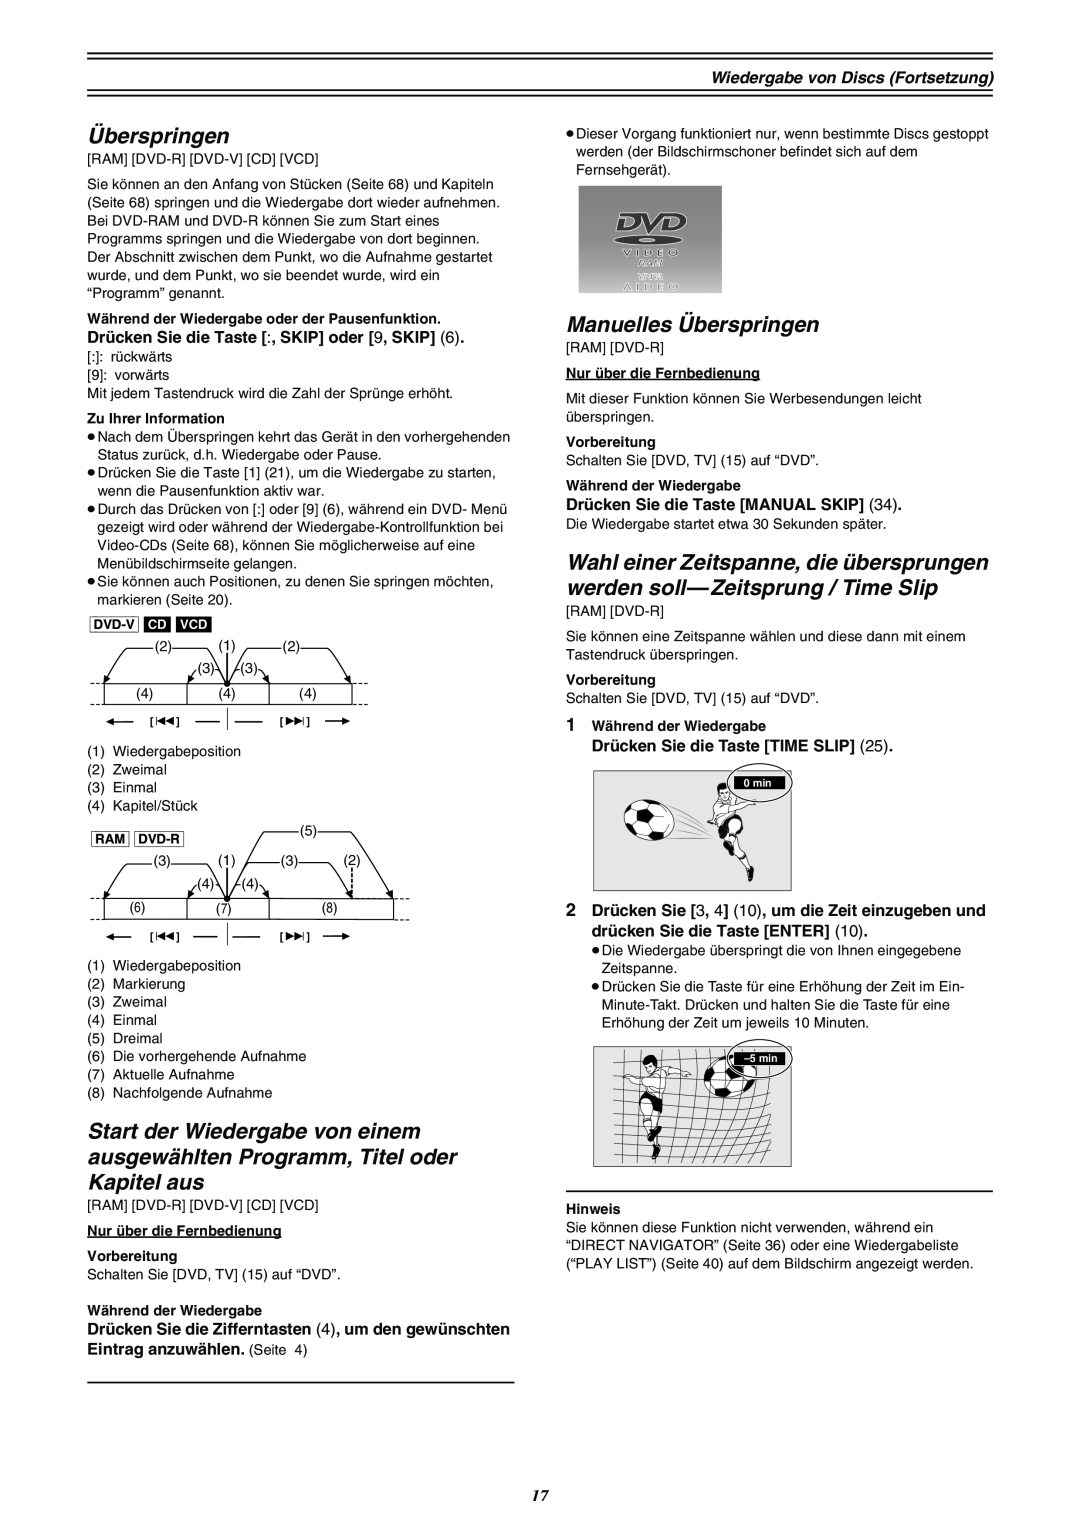 Panasonic DMR-E30 manual Manuelles Überspringen, 0 min, 5 min 